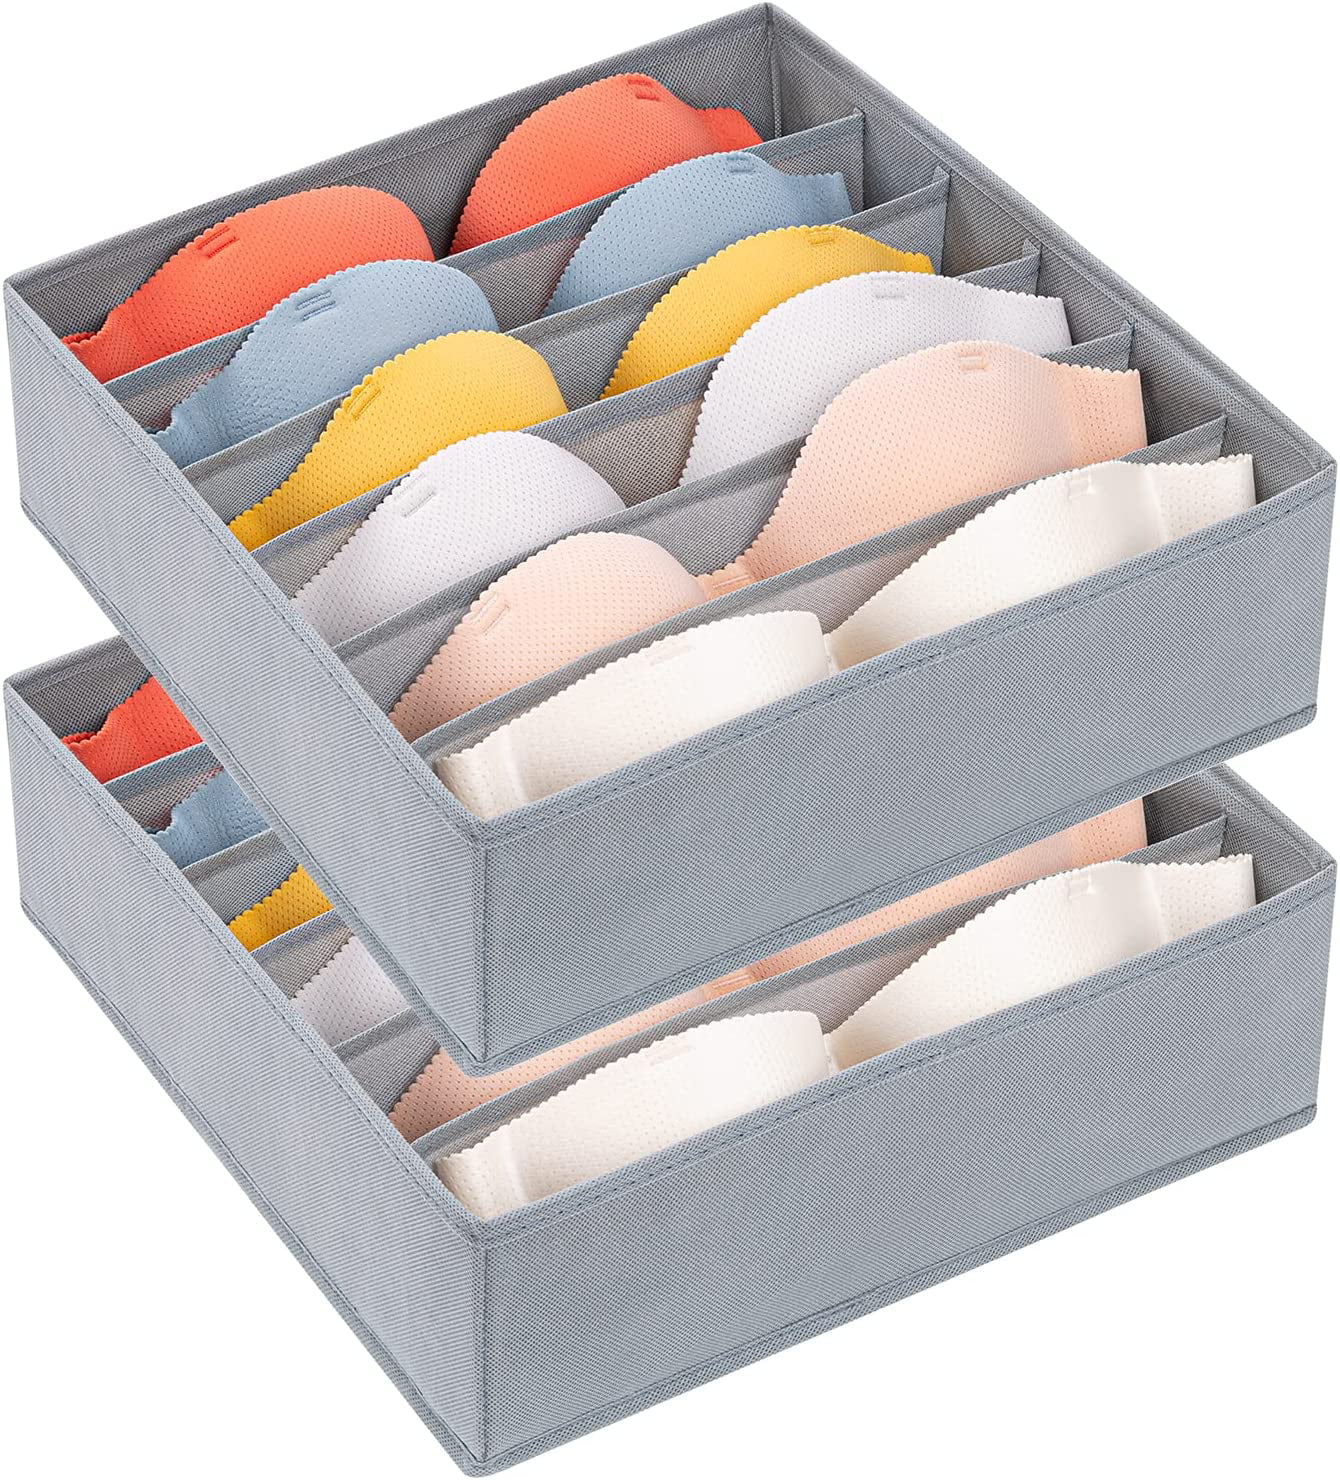 6Pcs Underwear Bra Socks Ties Drawer Storage Organizer Boxes Closet Divider Tidy 